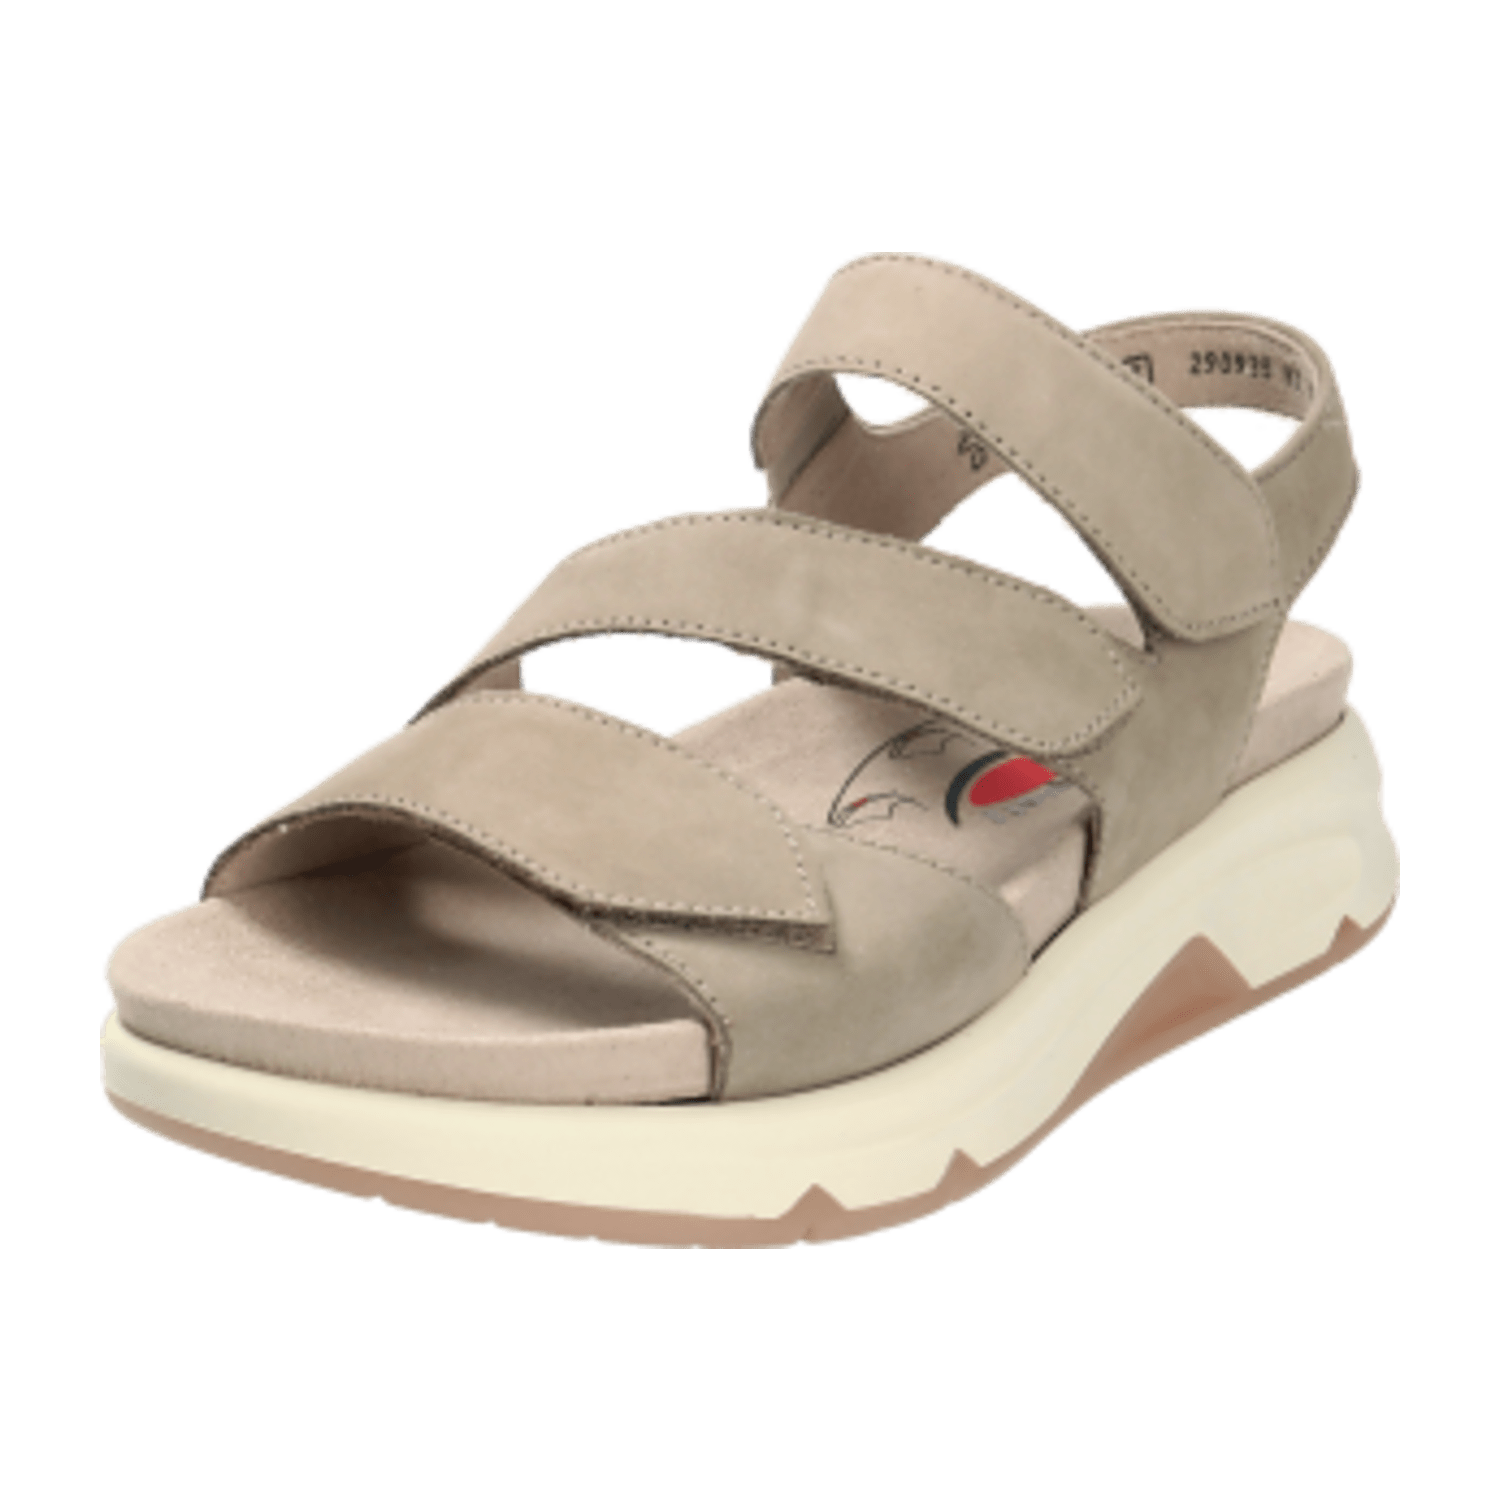 Gabor comfort 26887-43 Rollingsoft Leinen (Beige) - sportliche Sandale - Damenschuhe Sandale bequem / lose Einlage, Beige, leder (soft nubuk)